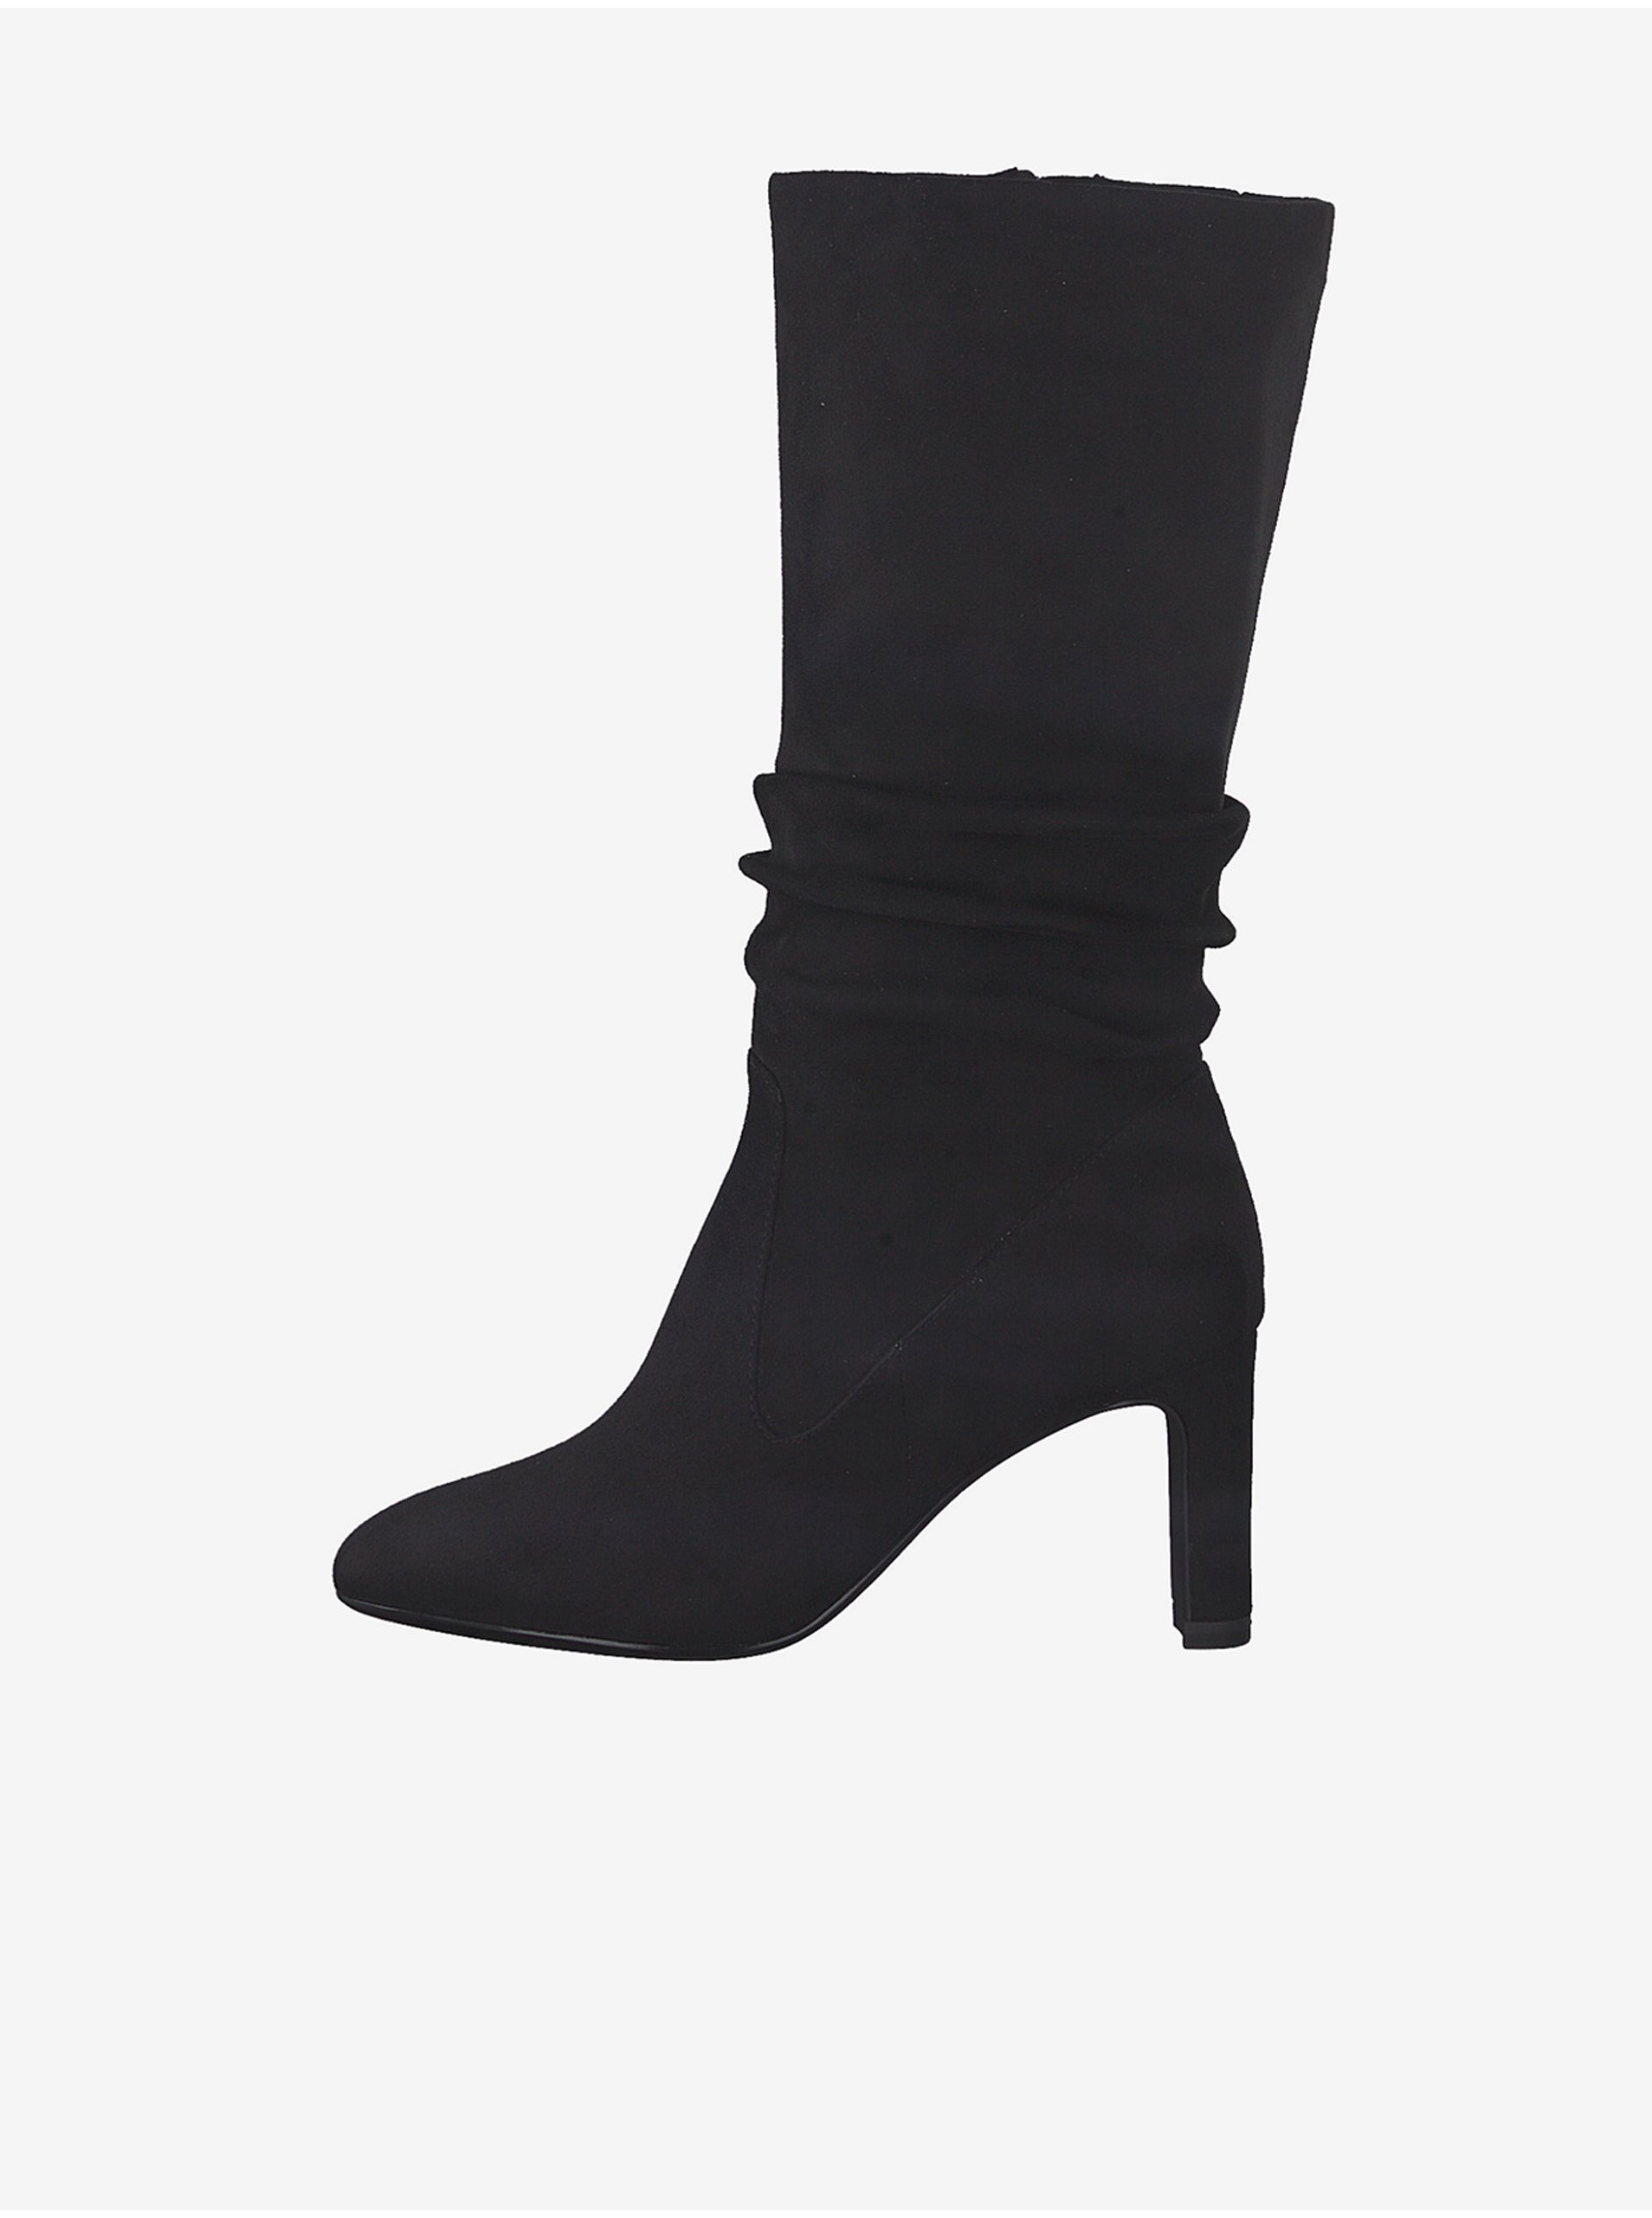 Black heeled boots in suede finish Tamaris - Women